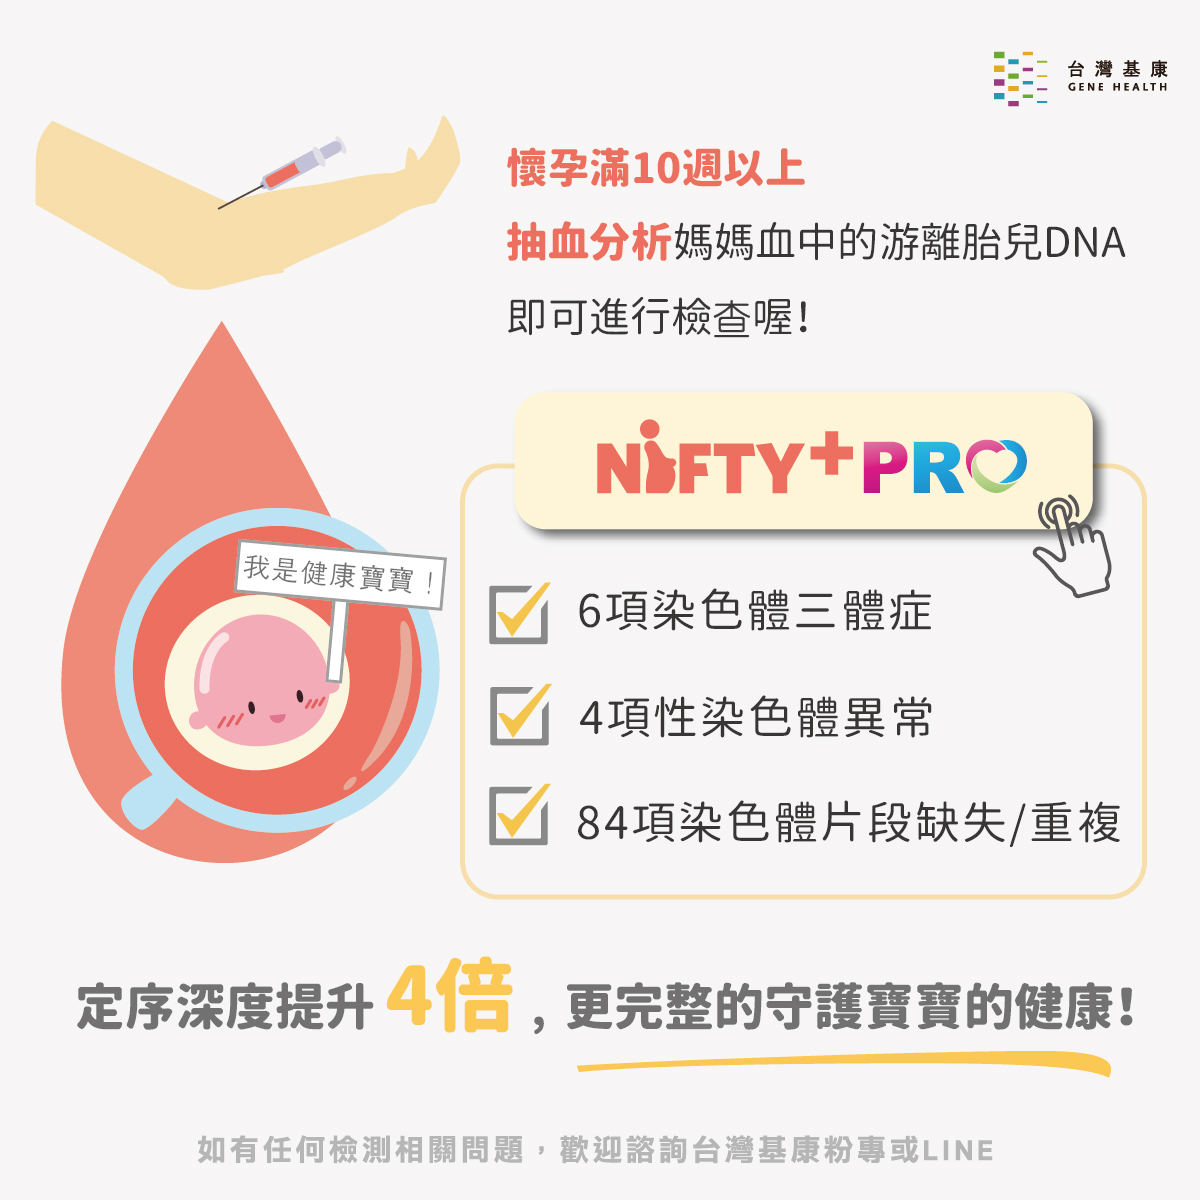 NIFTY PRO 可以檢測出更完整的染色體片段缺失或重複項目，幫助您守護寶寶的健康。